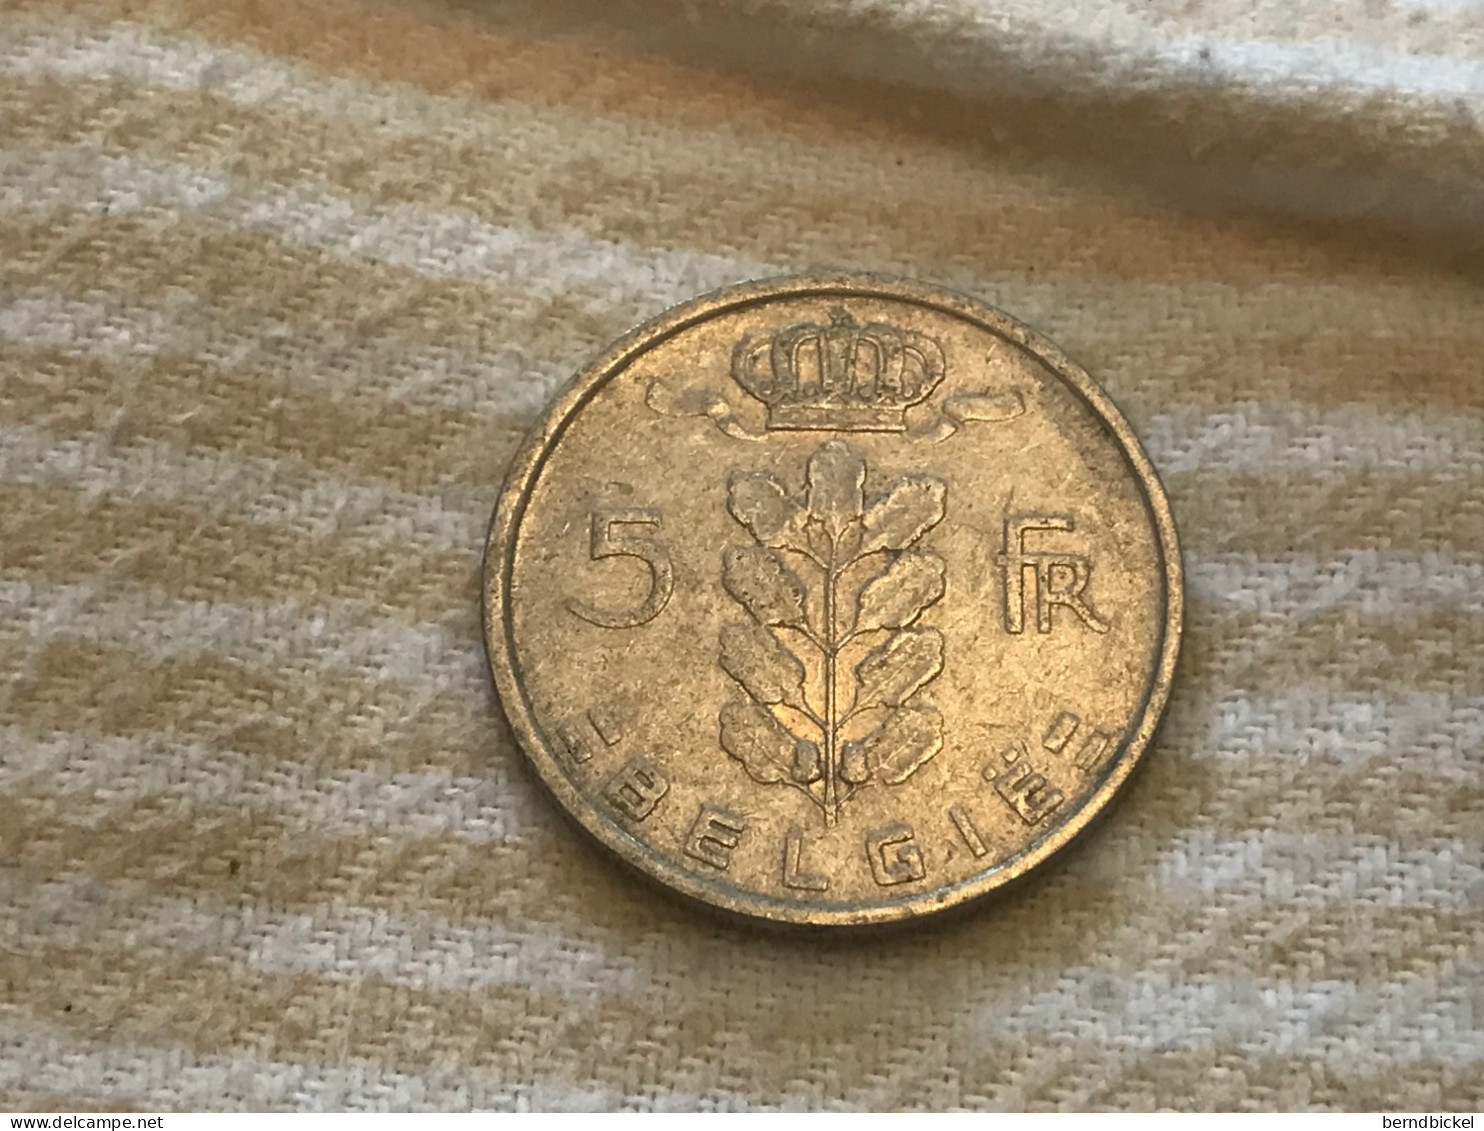 Münze Münzen Umlaufmünze Belgien 5 Francs 1950 Belgie - 5 Frank